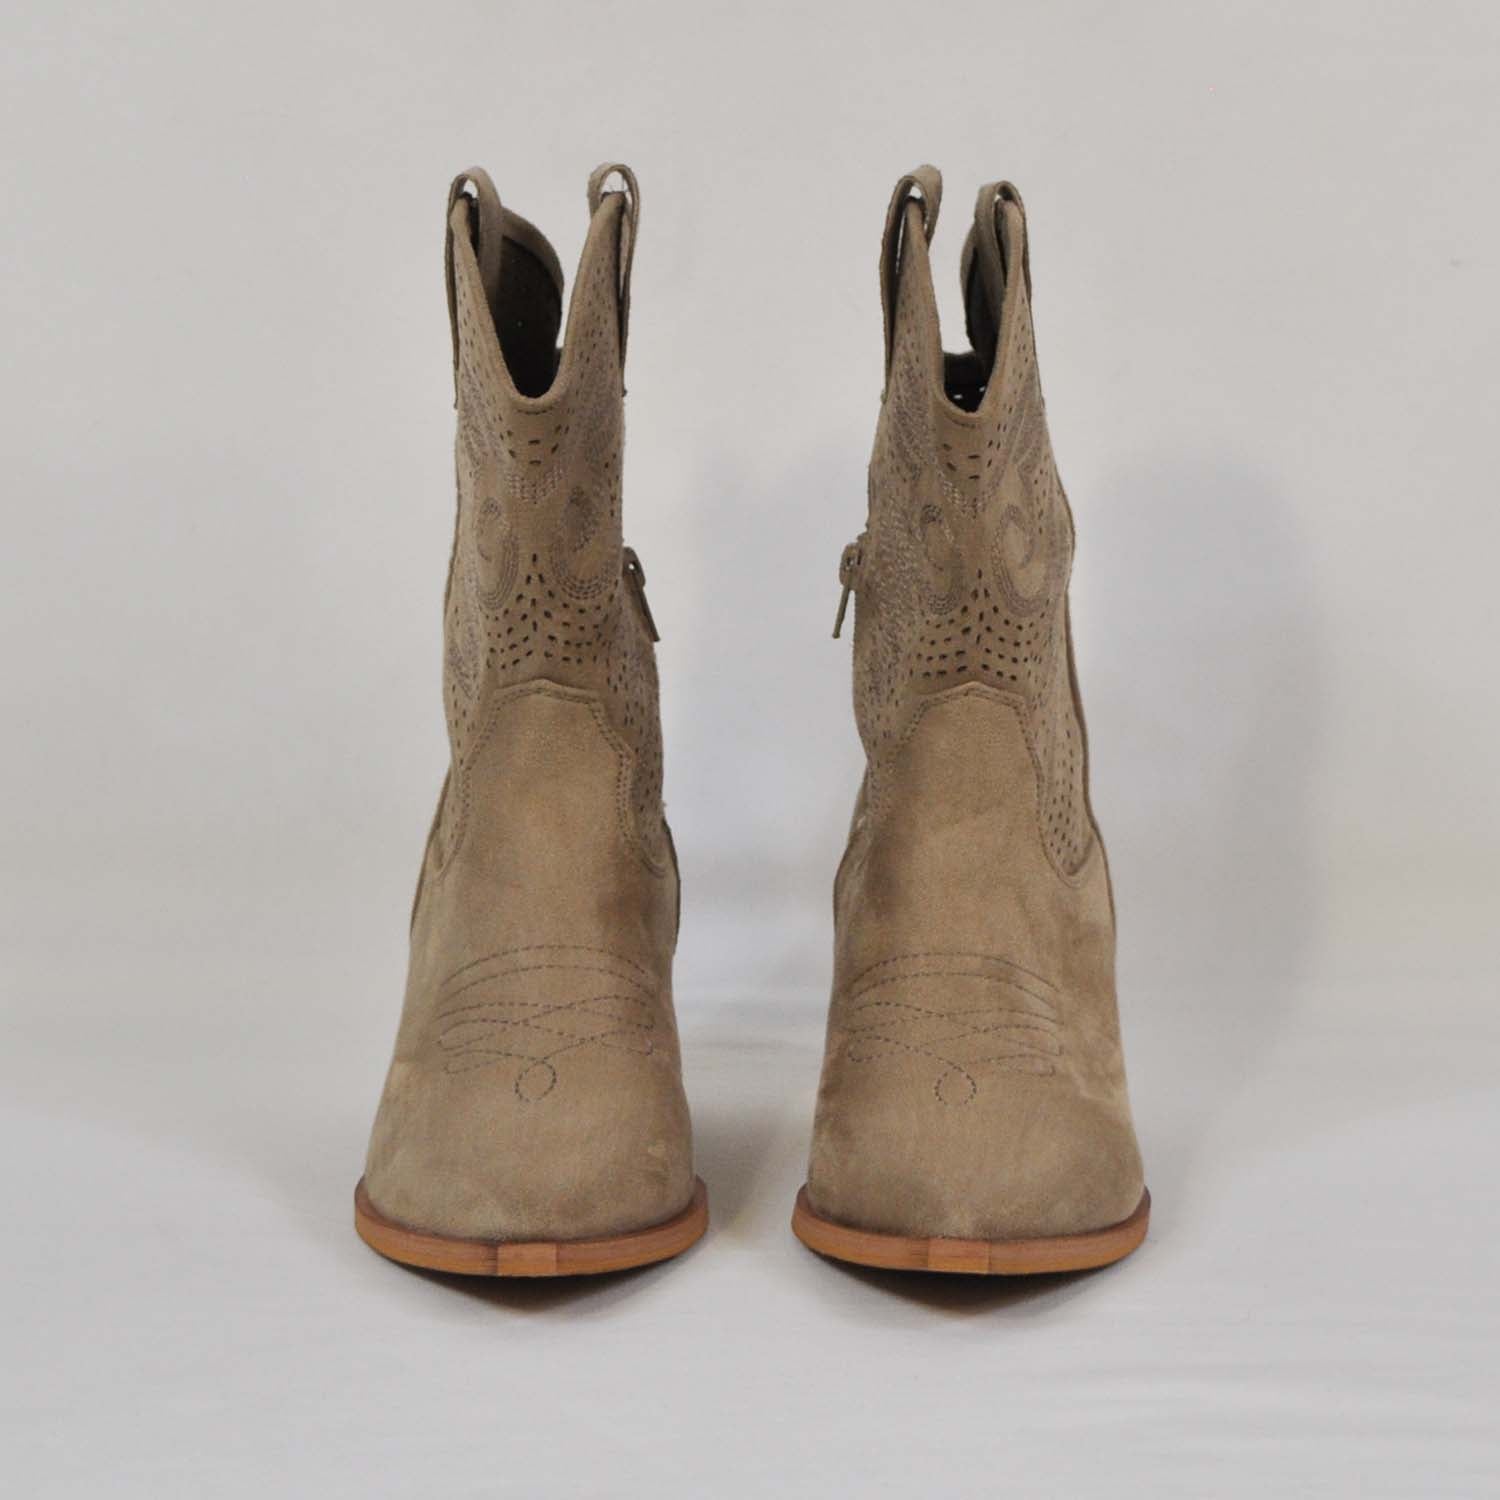 Beige western boots